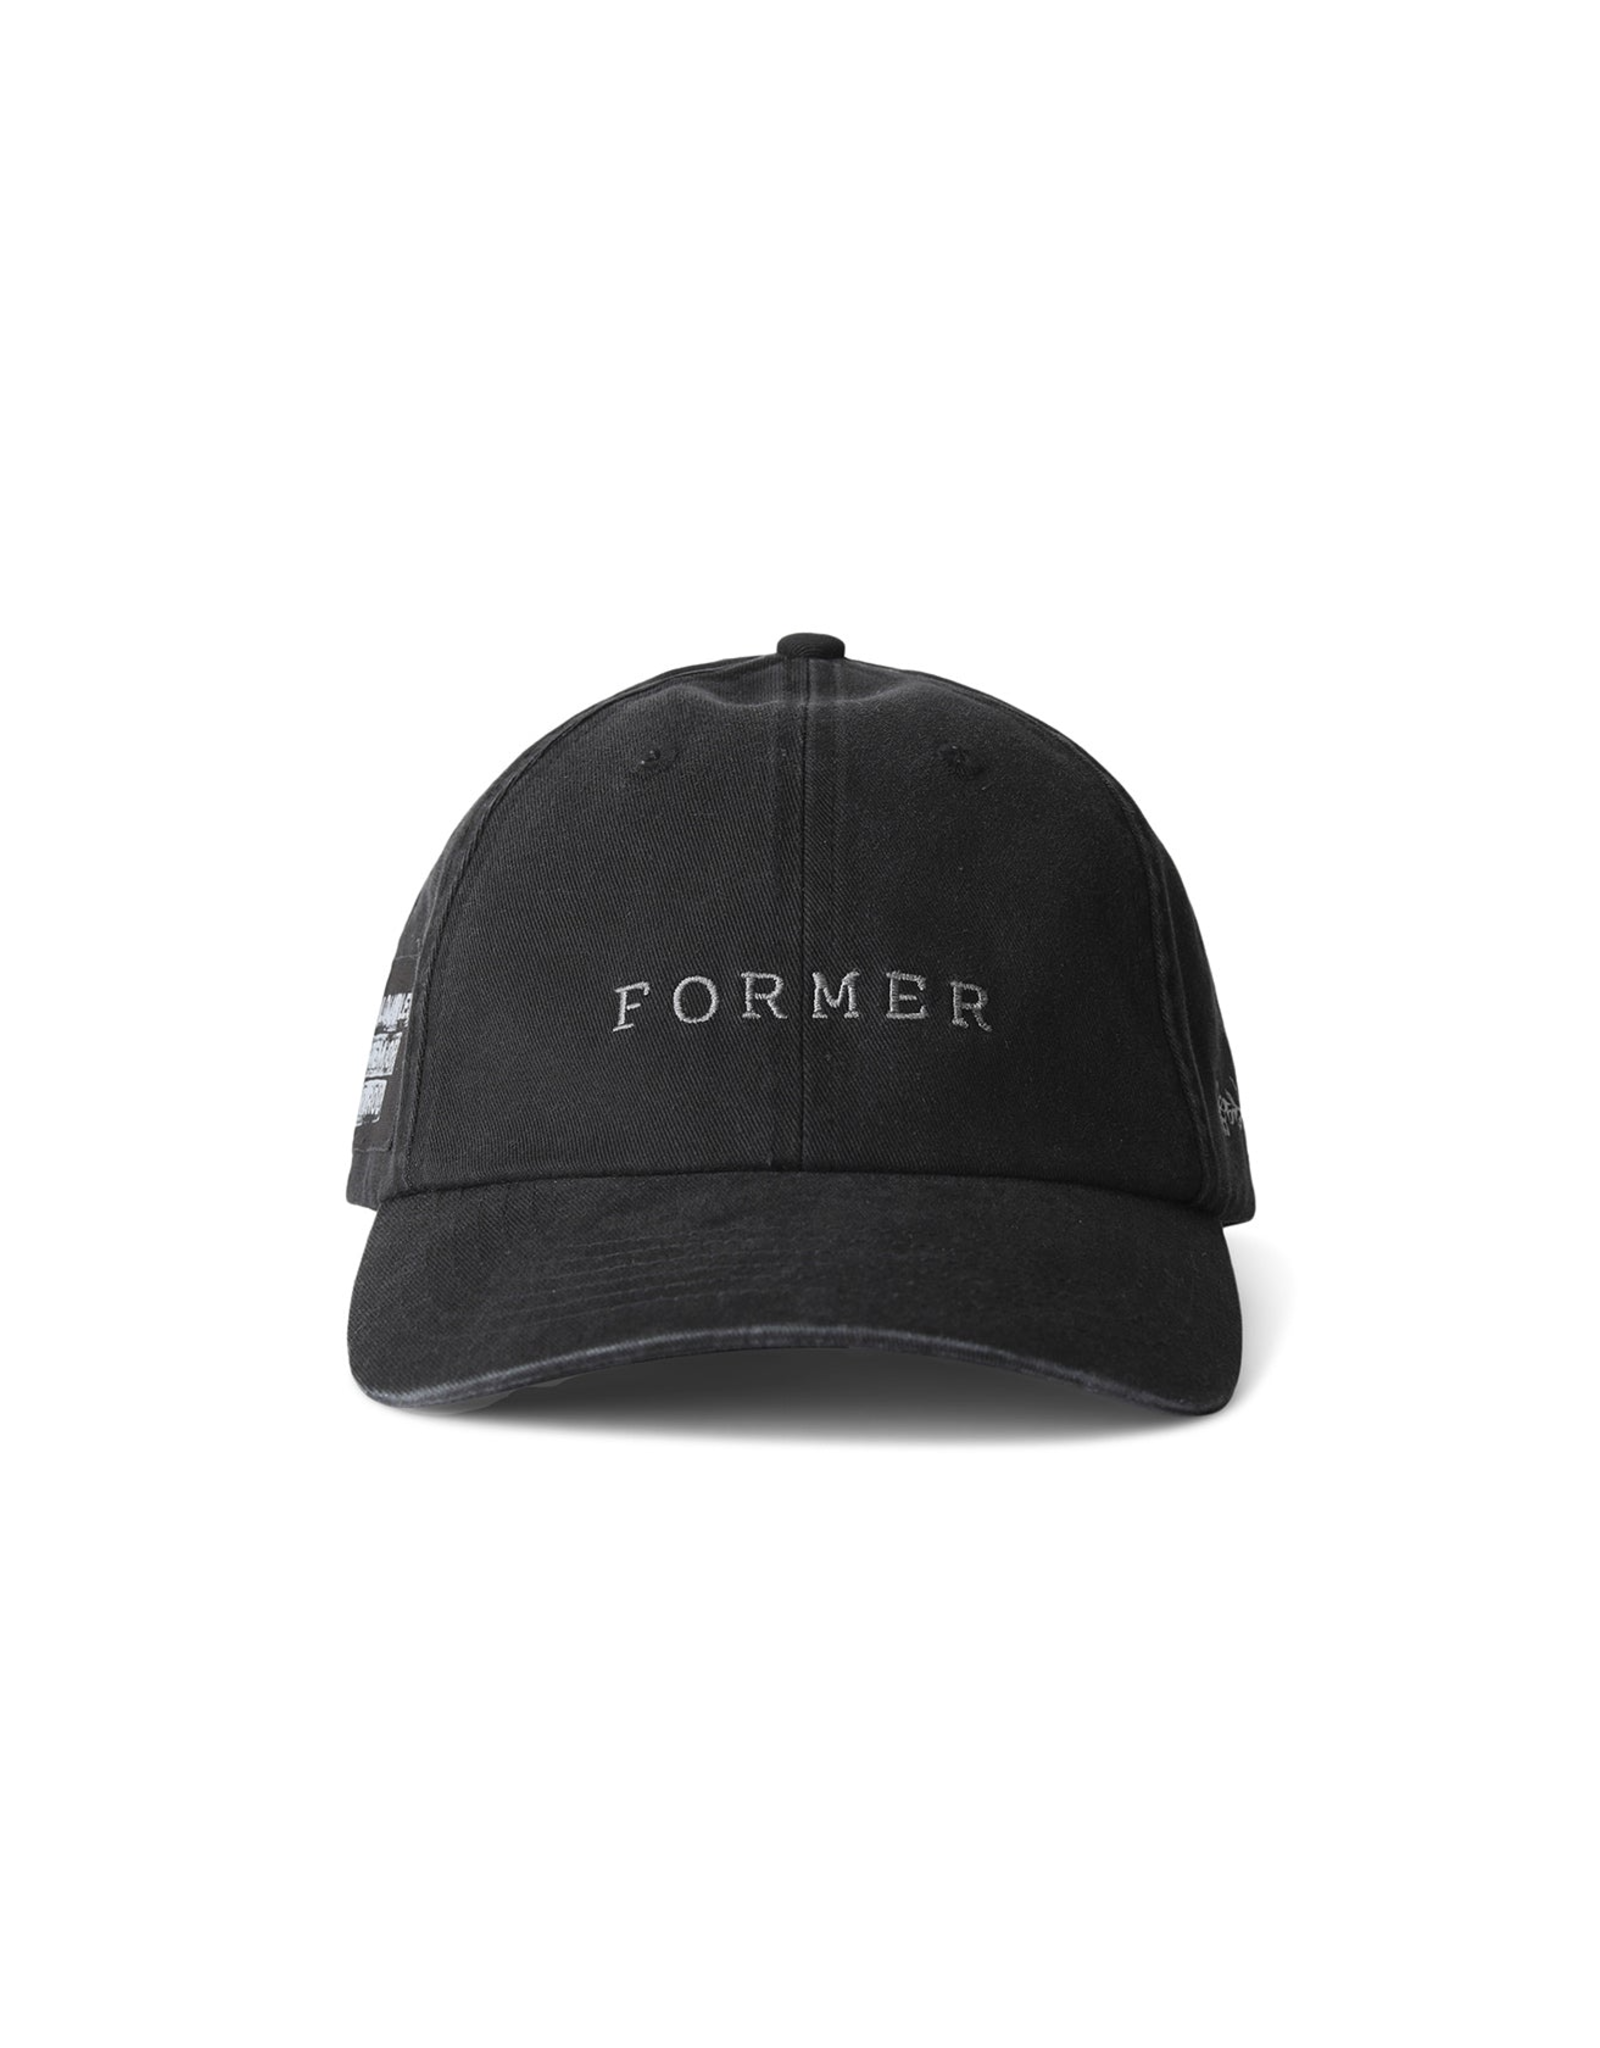 FORMER FORMER SHIFTING CAP - BLACK